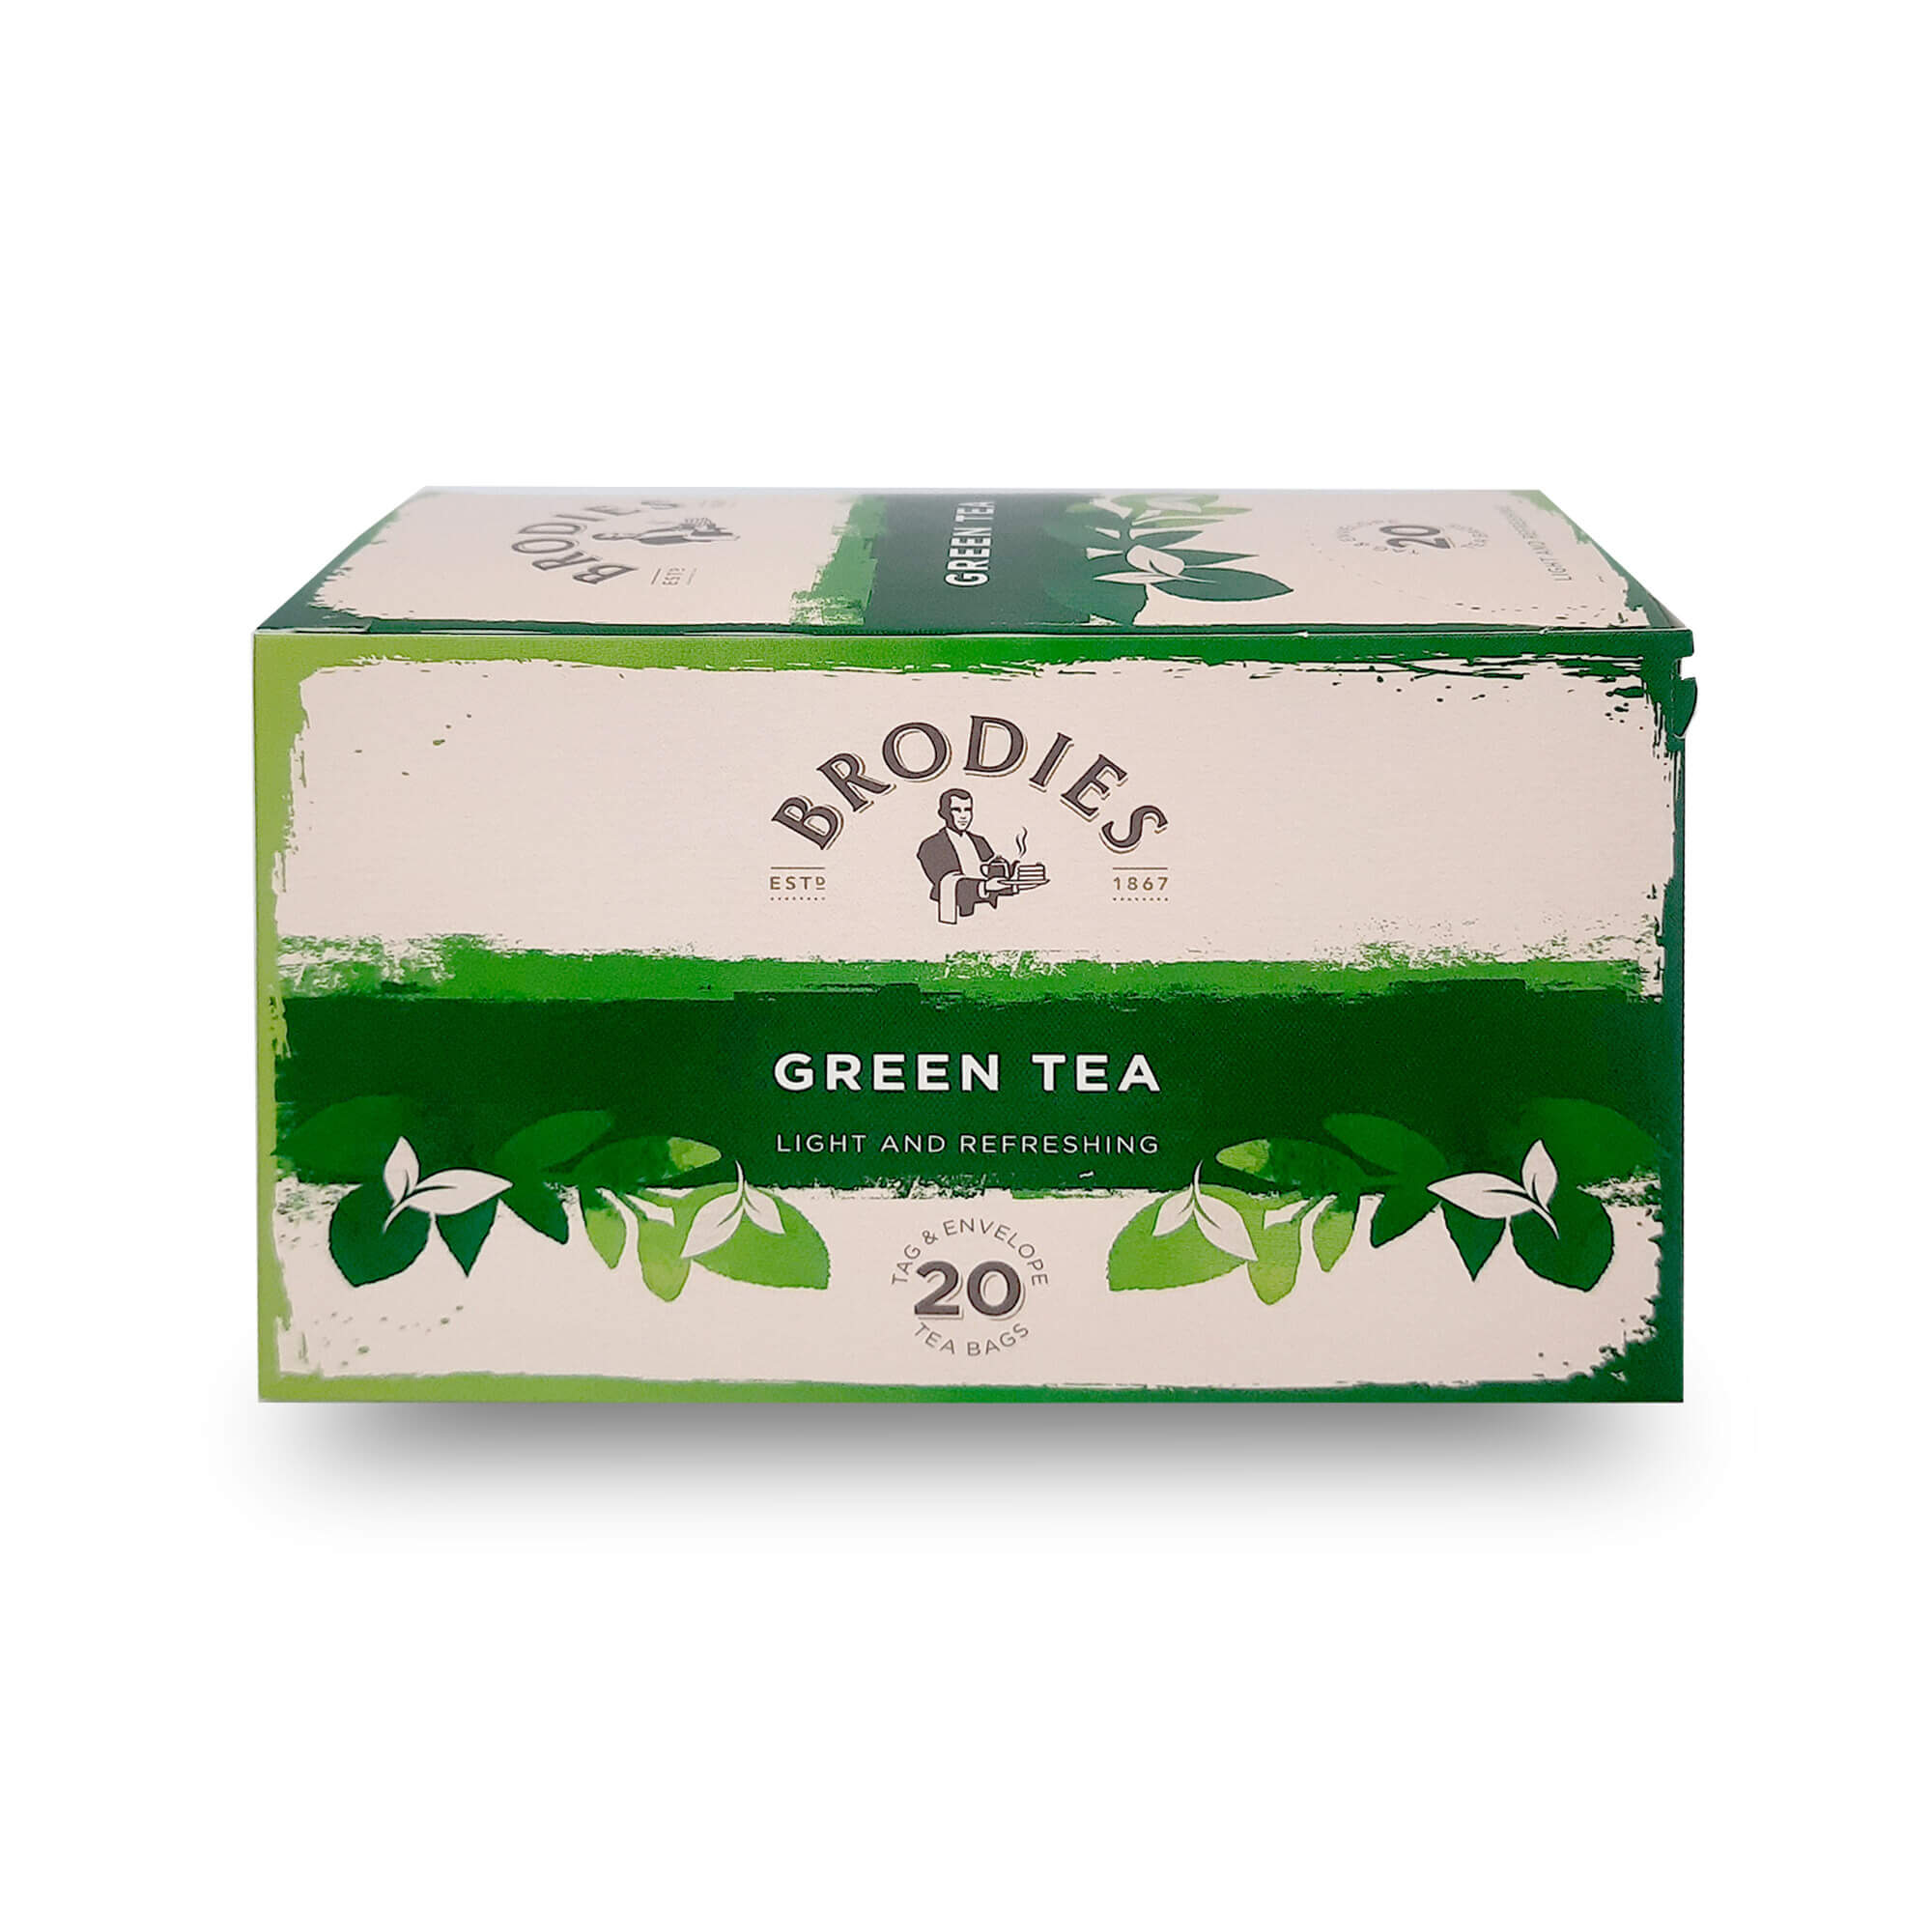 Brodies Green Tea 2g X 20's